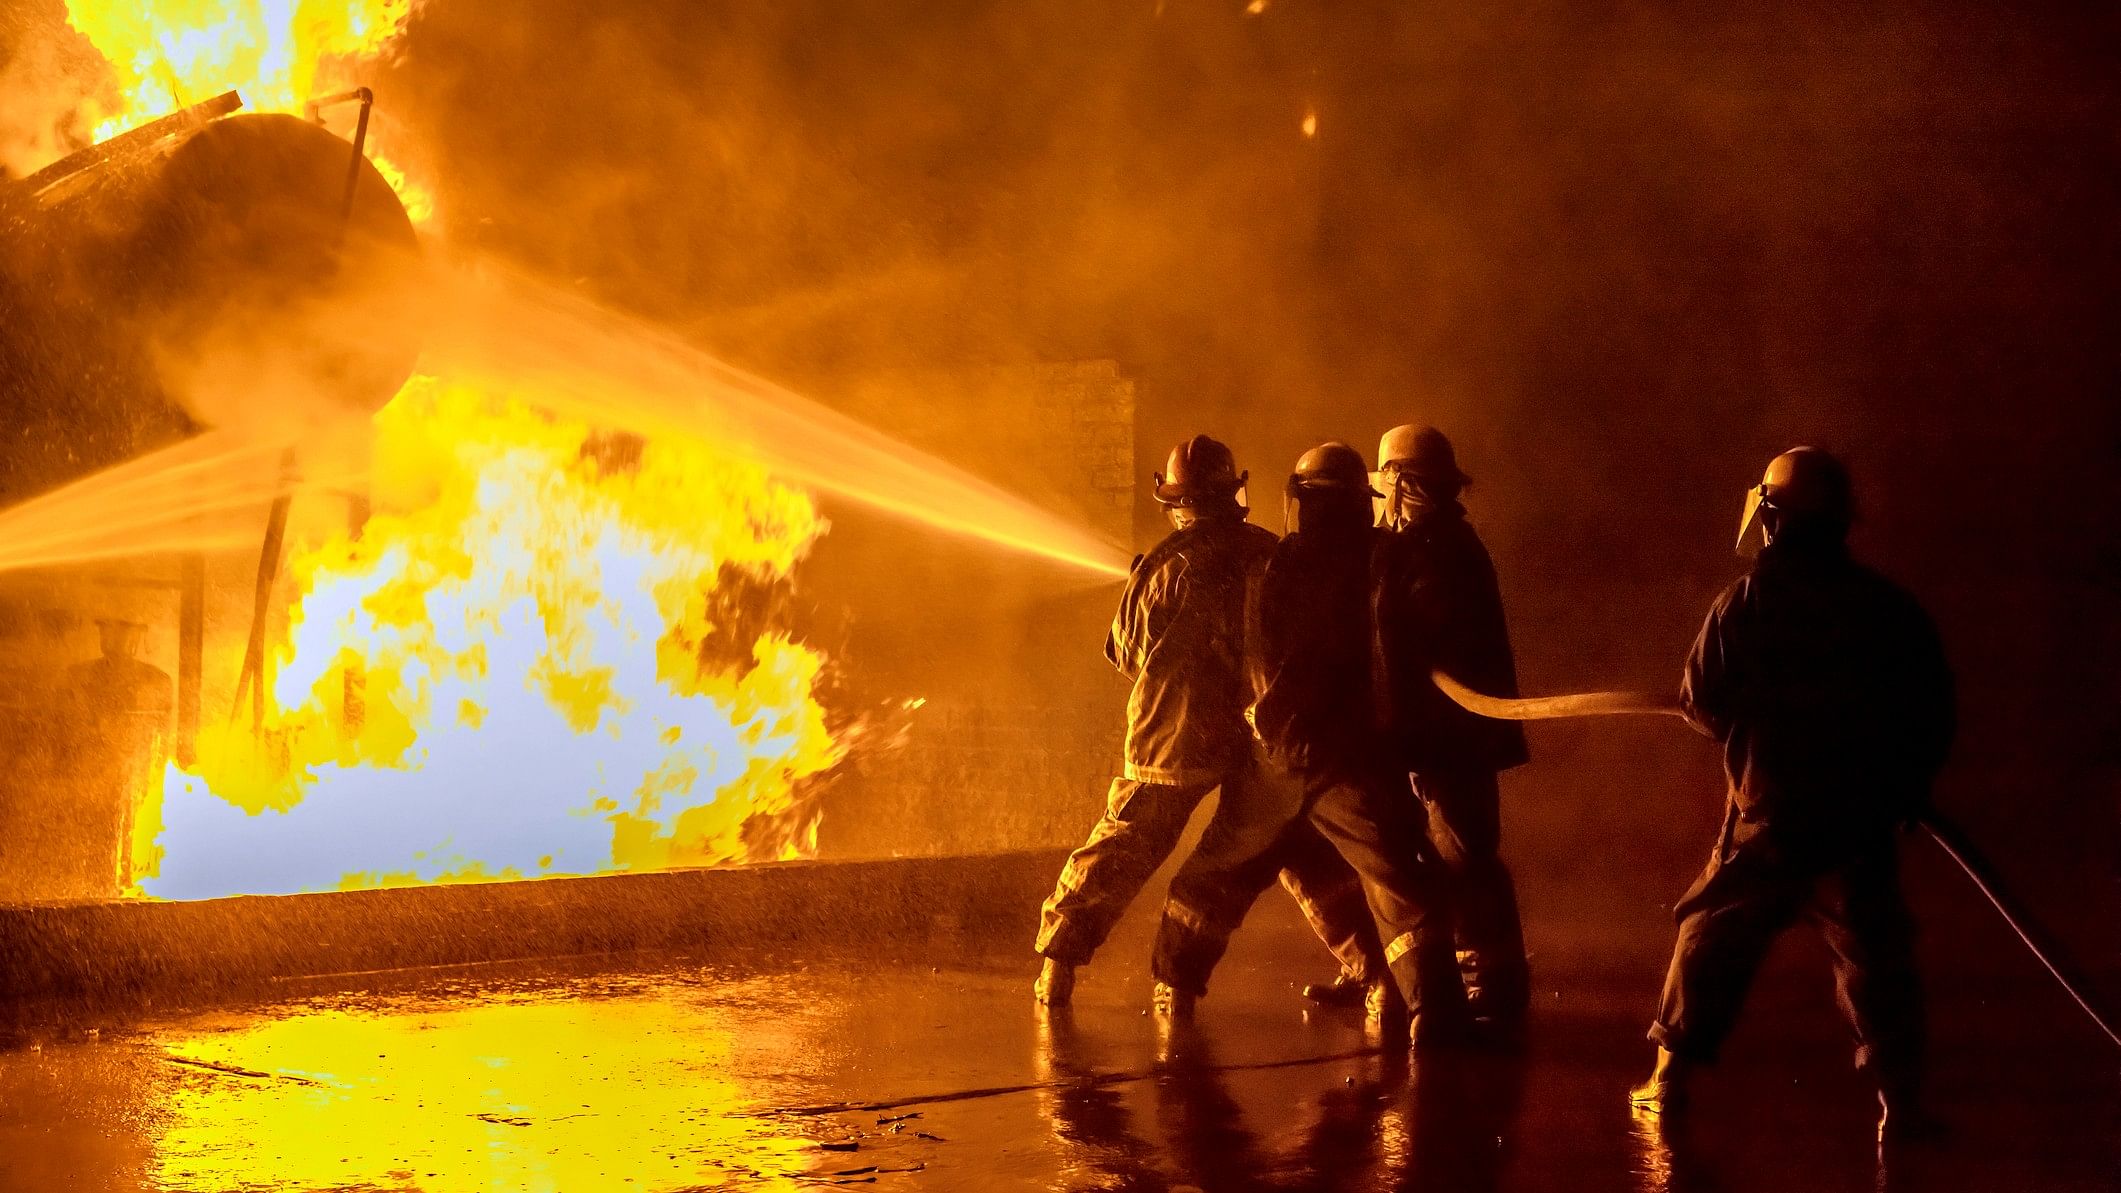 <div class="paragraphs"><p>Representative image showing firefighters battling a blaze.</p></div>